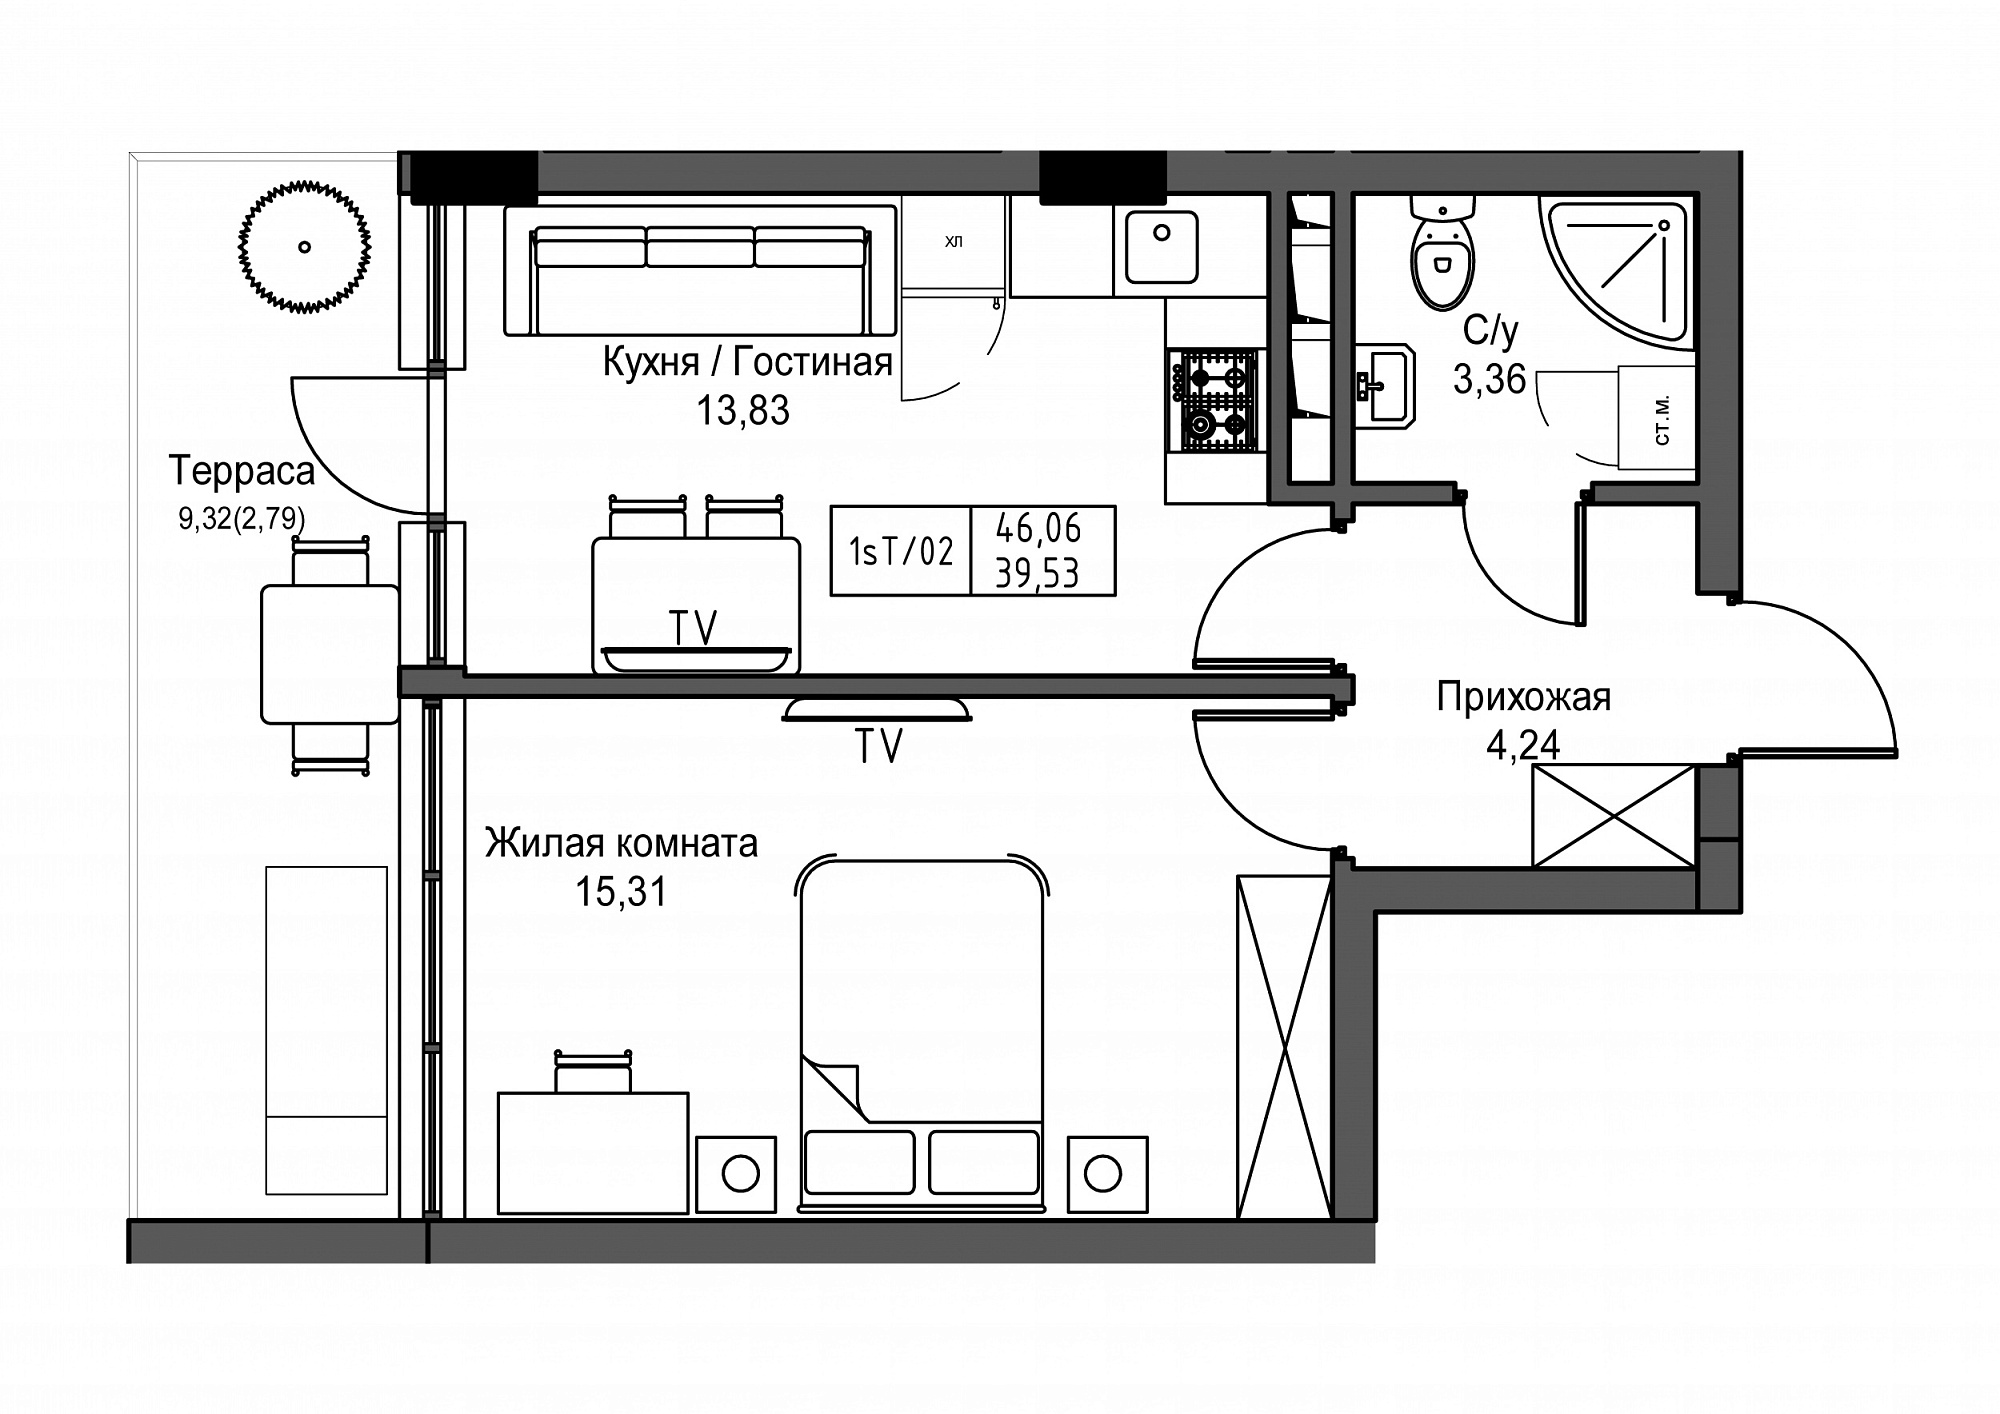 Planning 1-rm flats area 39.53m2, UM-003-02/0010.